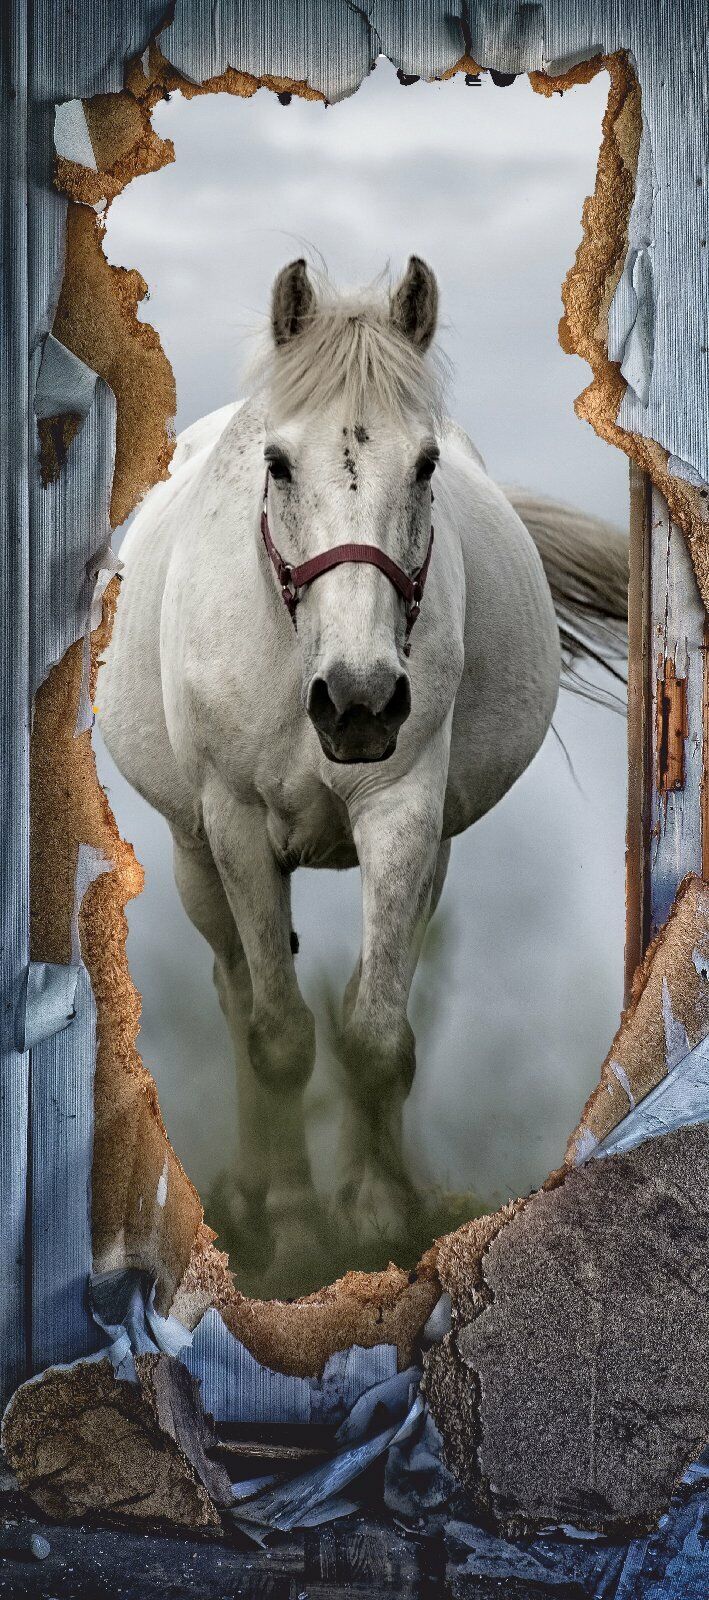 Türposter Pony Pferd Schimmel Tapete selbstklebend  200x90cm 9010